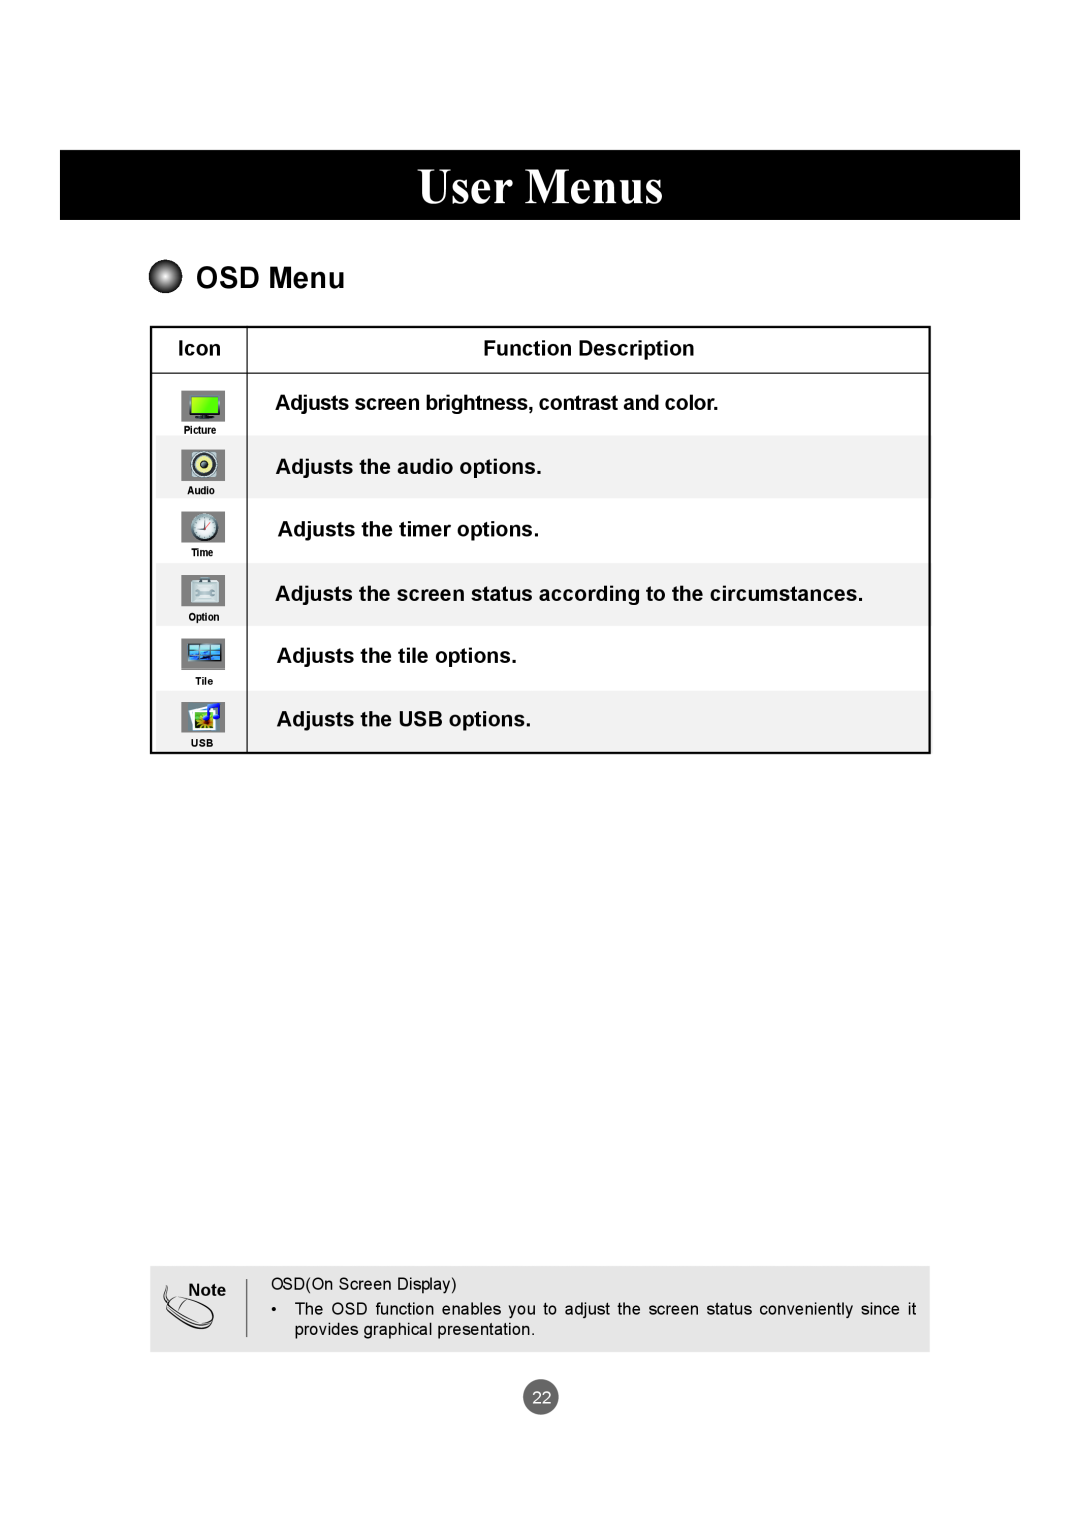 LG Electronics M4720C OSD Menu, User Menus, Icon, Function Description, Adjusts screen brightness, contrast and color 